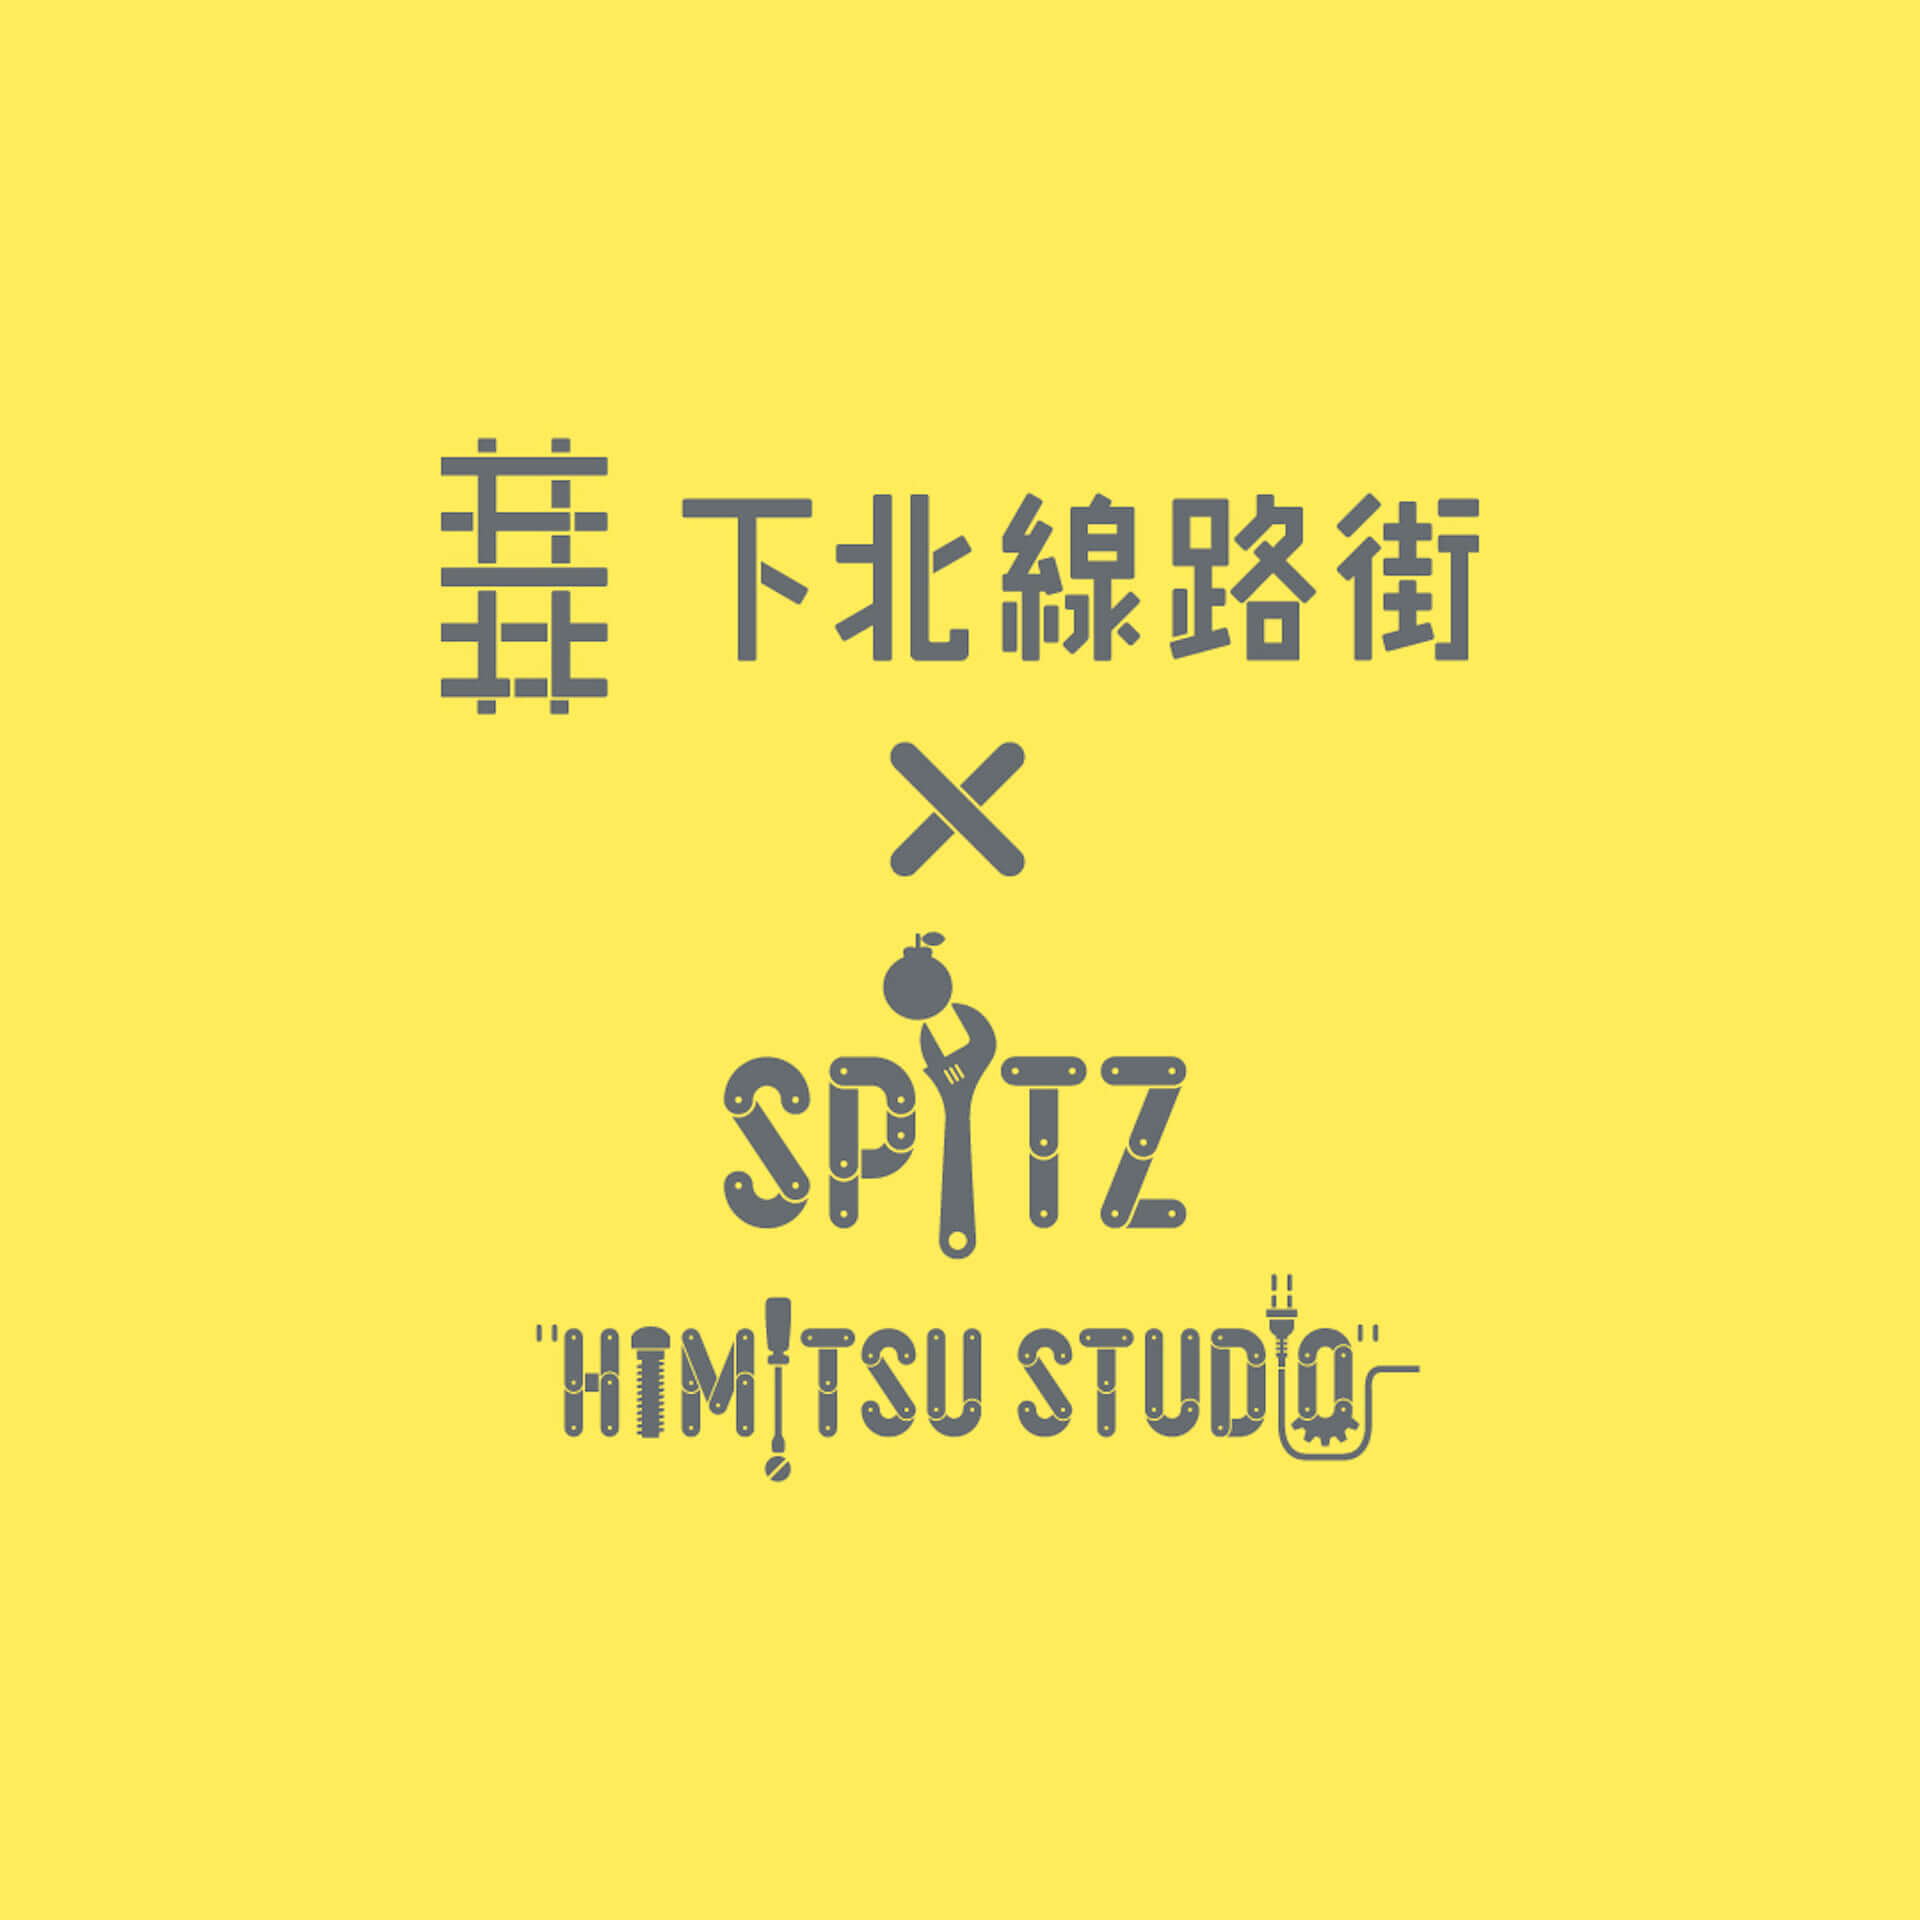 下北線路街 × SPITZ HIMITSU STUDIO